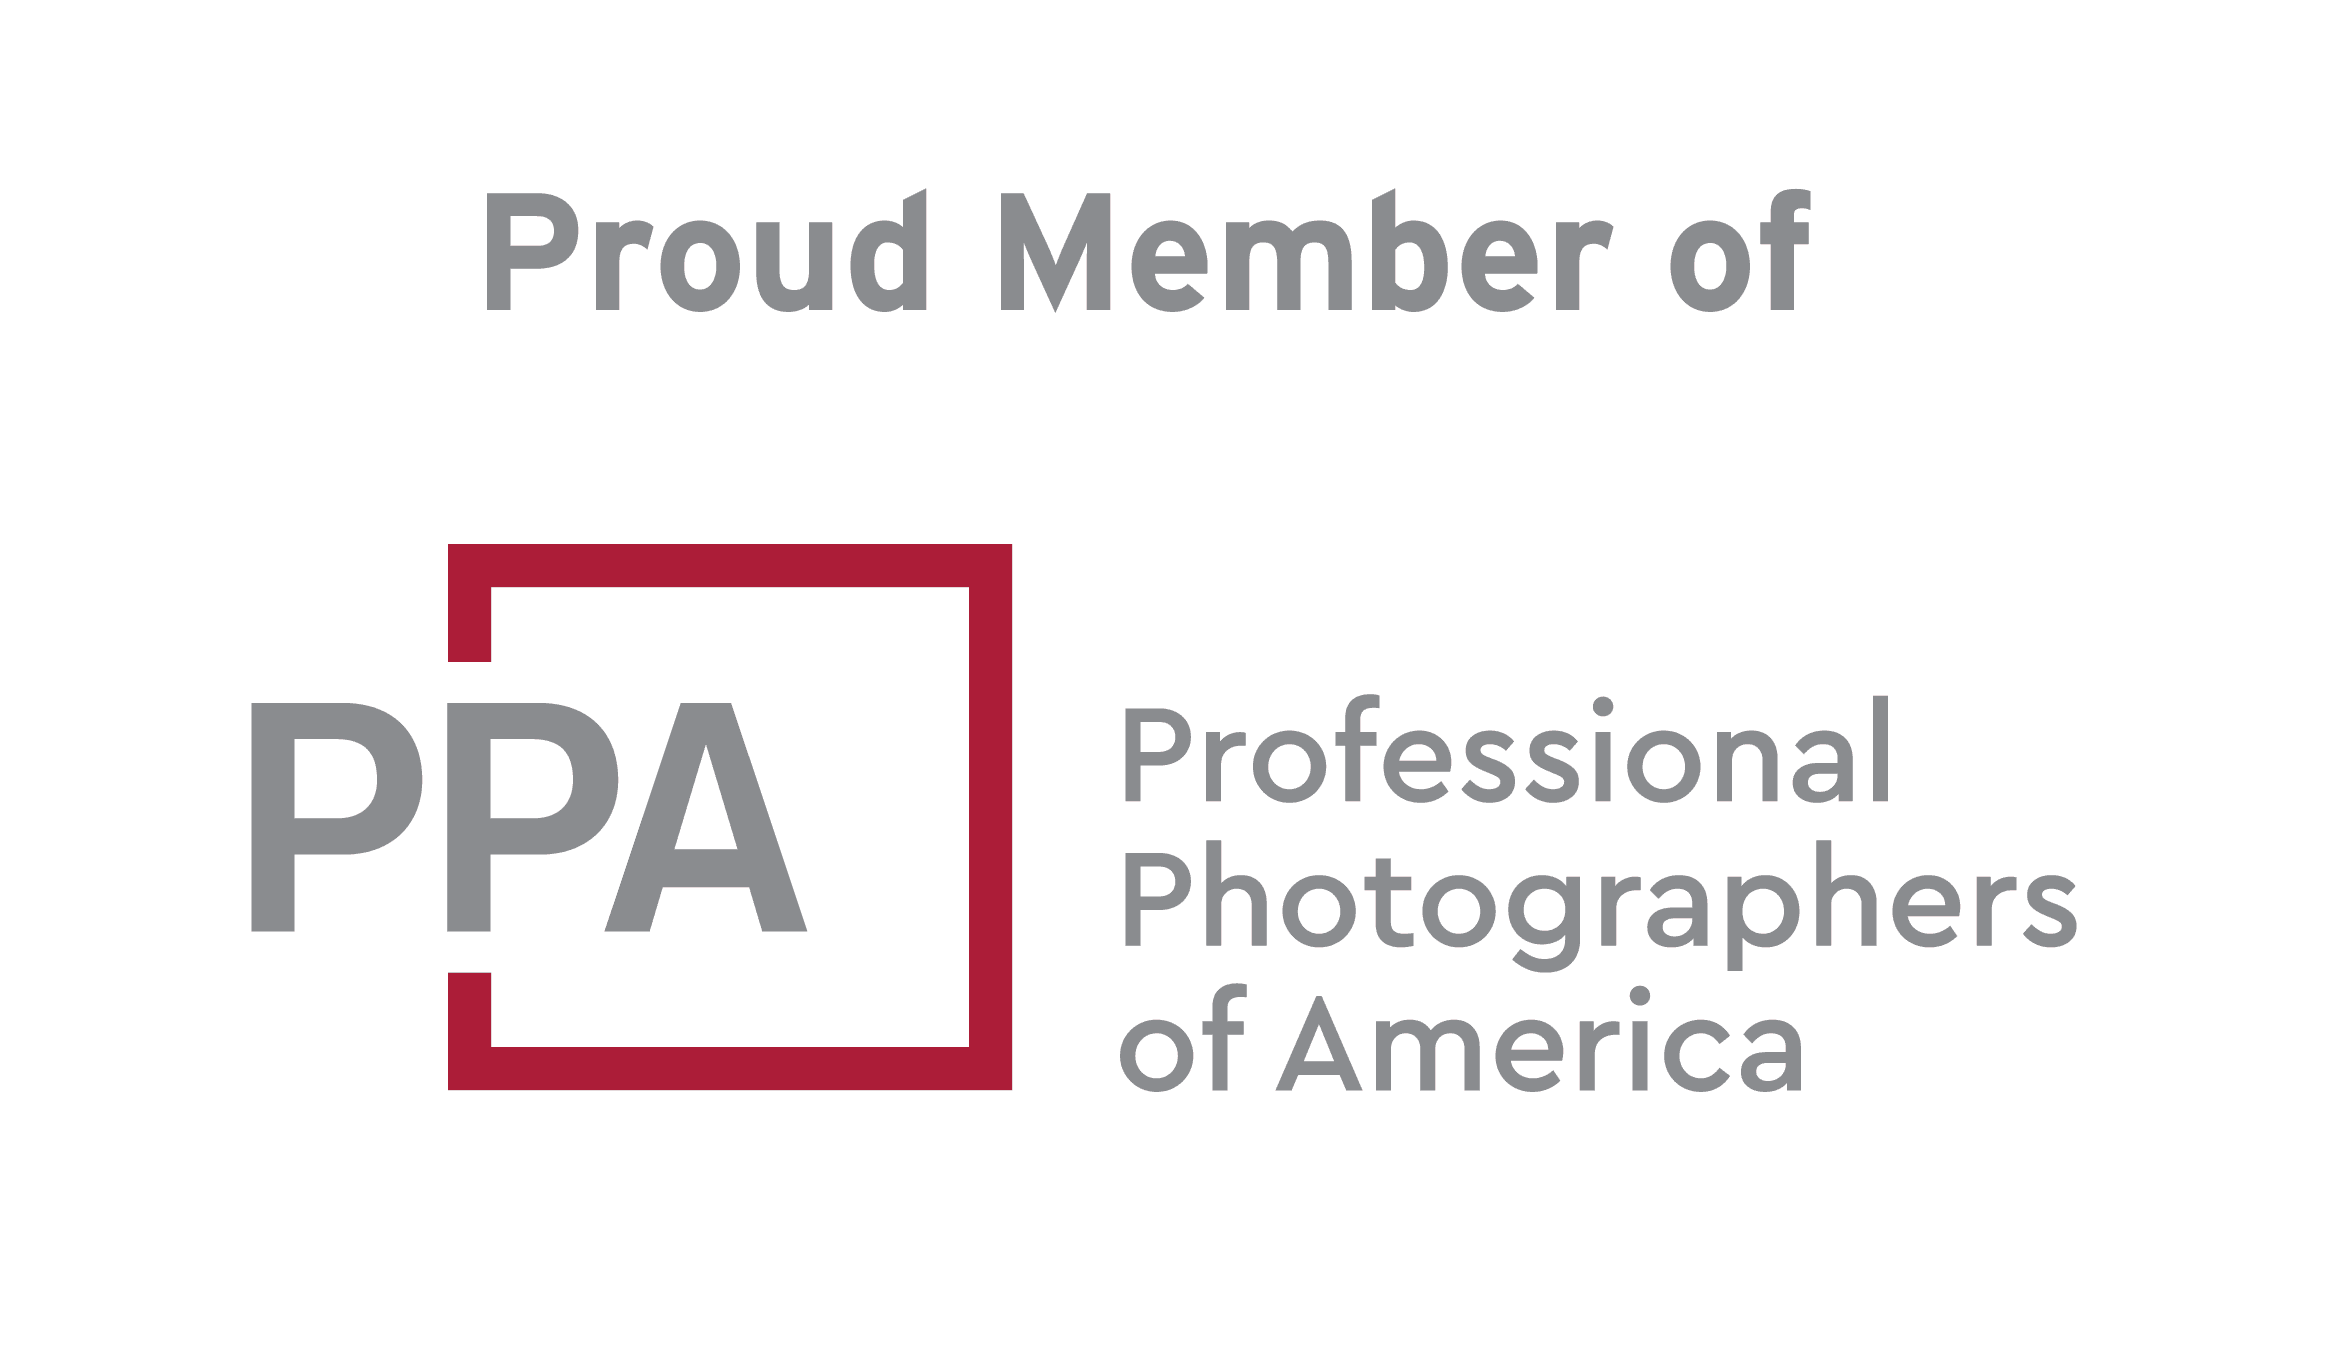 Professional Photographer of America